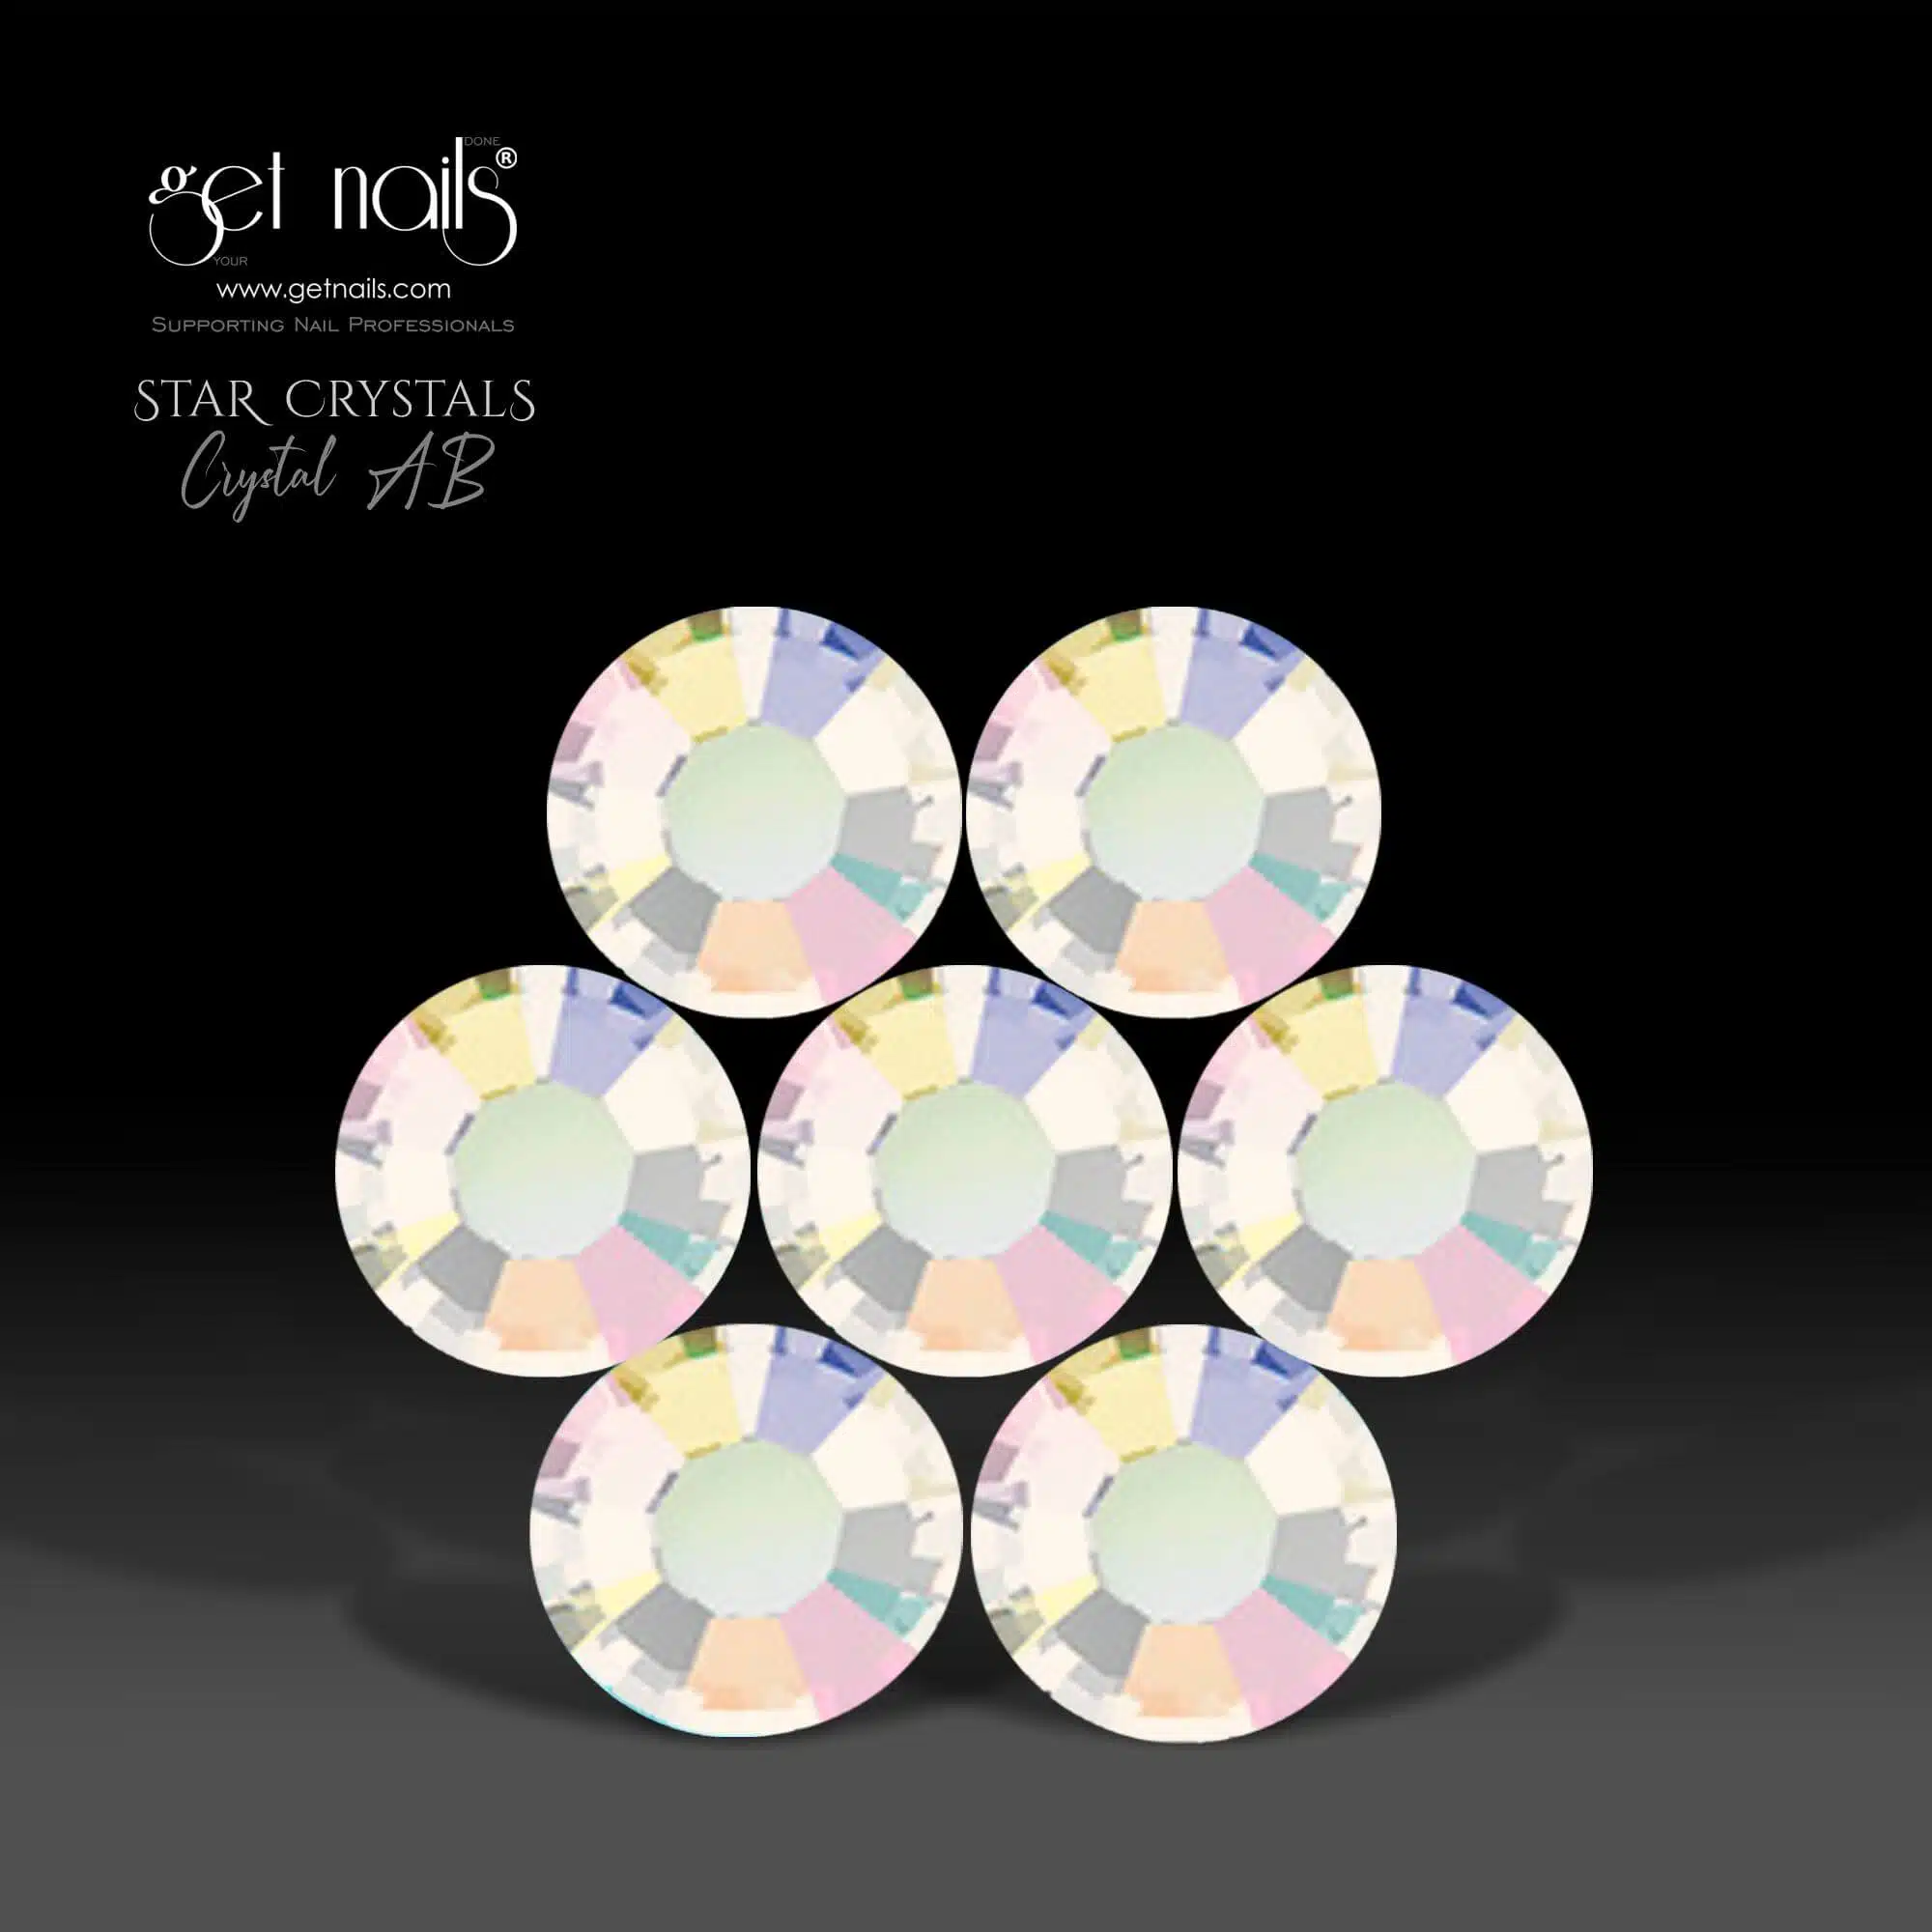 Get Nails Austria - Star Crystals AB, SS5